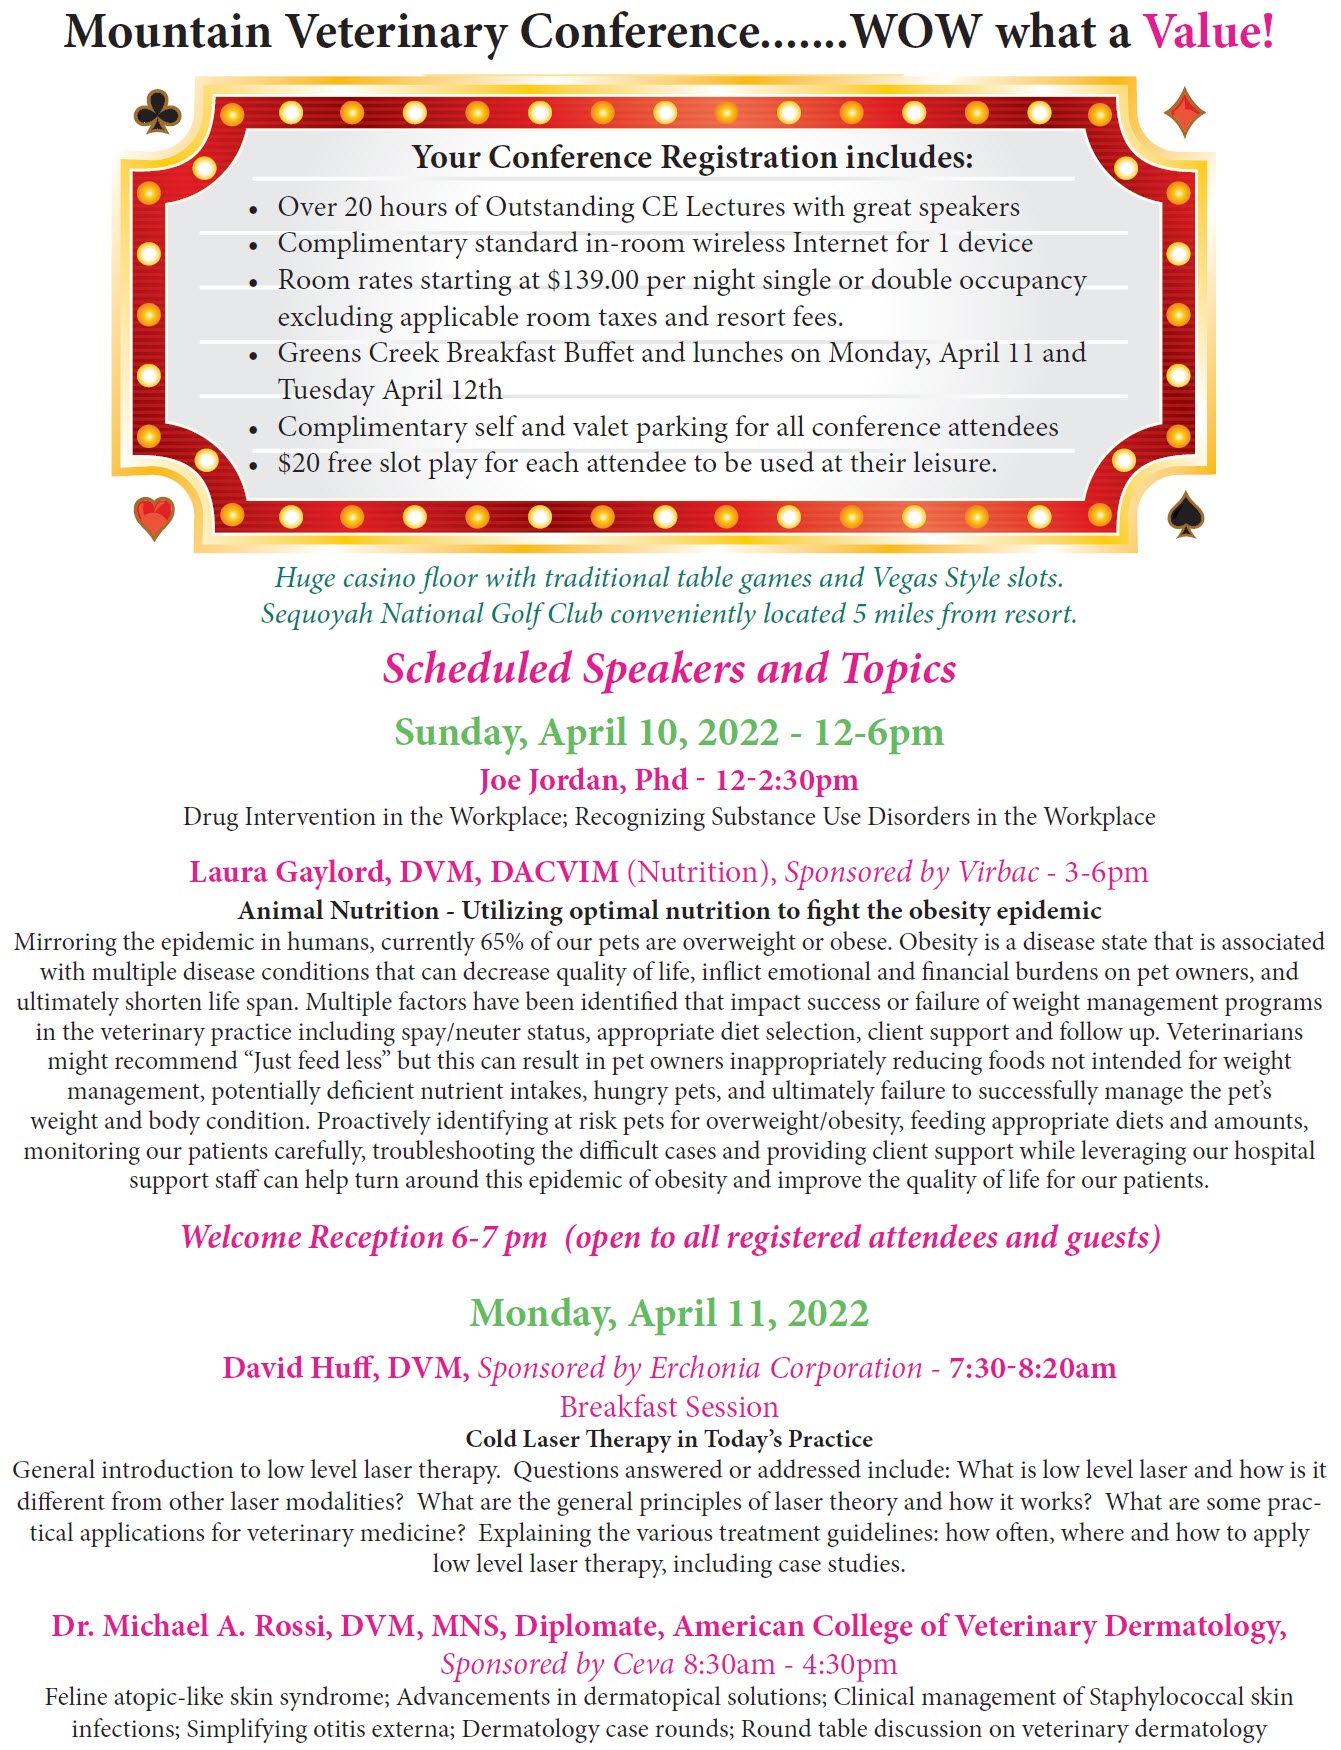 Mountain Veterinary Conference, April 10 - 13, 2022 at the beautiful Harrah's Cherokee Casino Resort